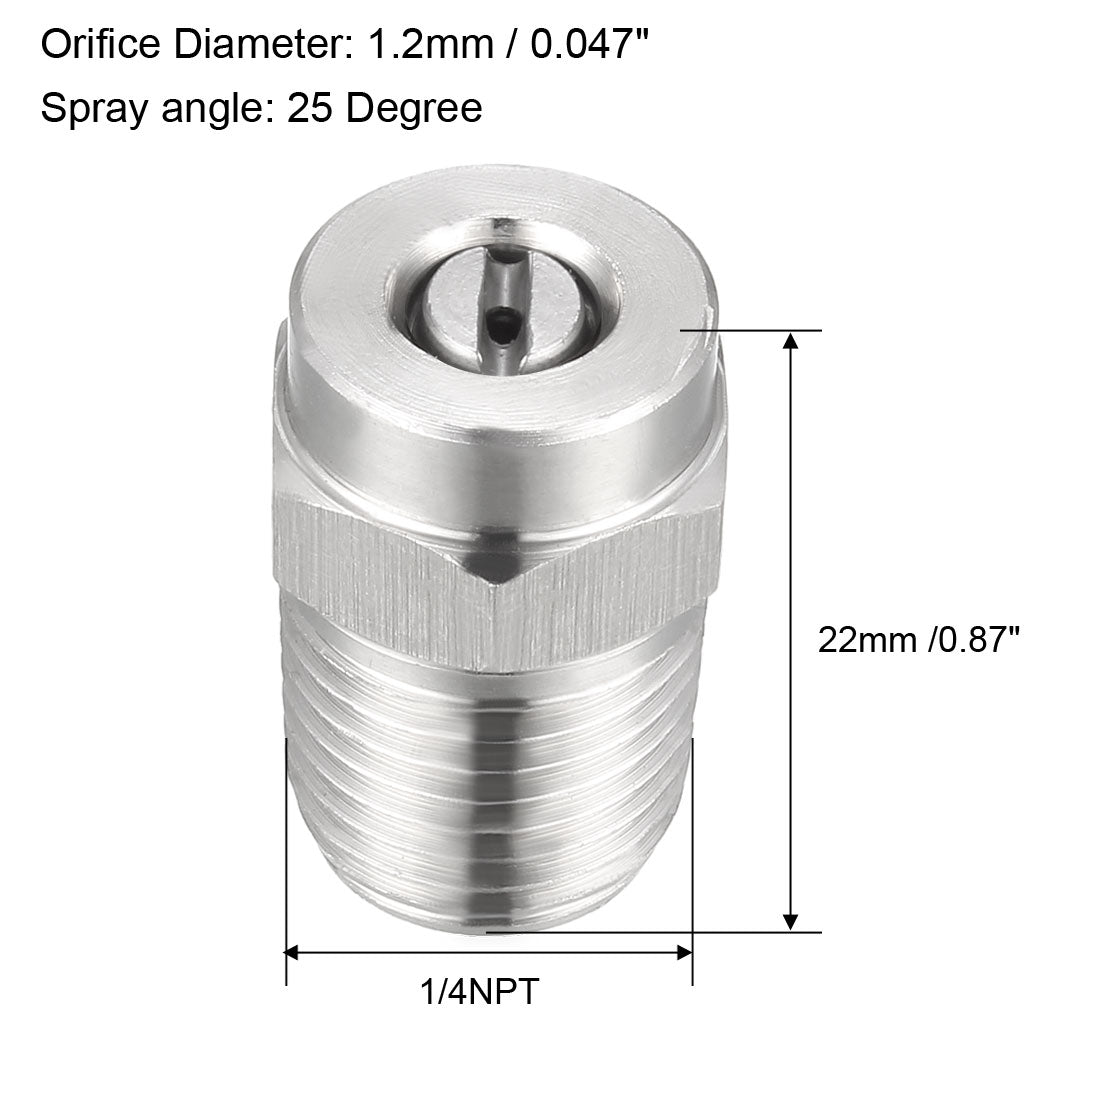 uxcell Uxcell Pressure Washer   Nozzle, 1/4NPT Thread Spray Tip, 2 Pcs (25 Degree, 1.2mm Orifice Diameter)